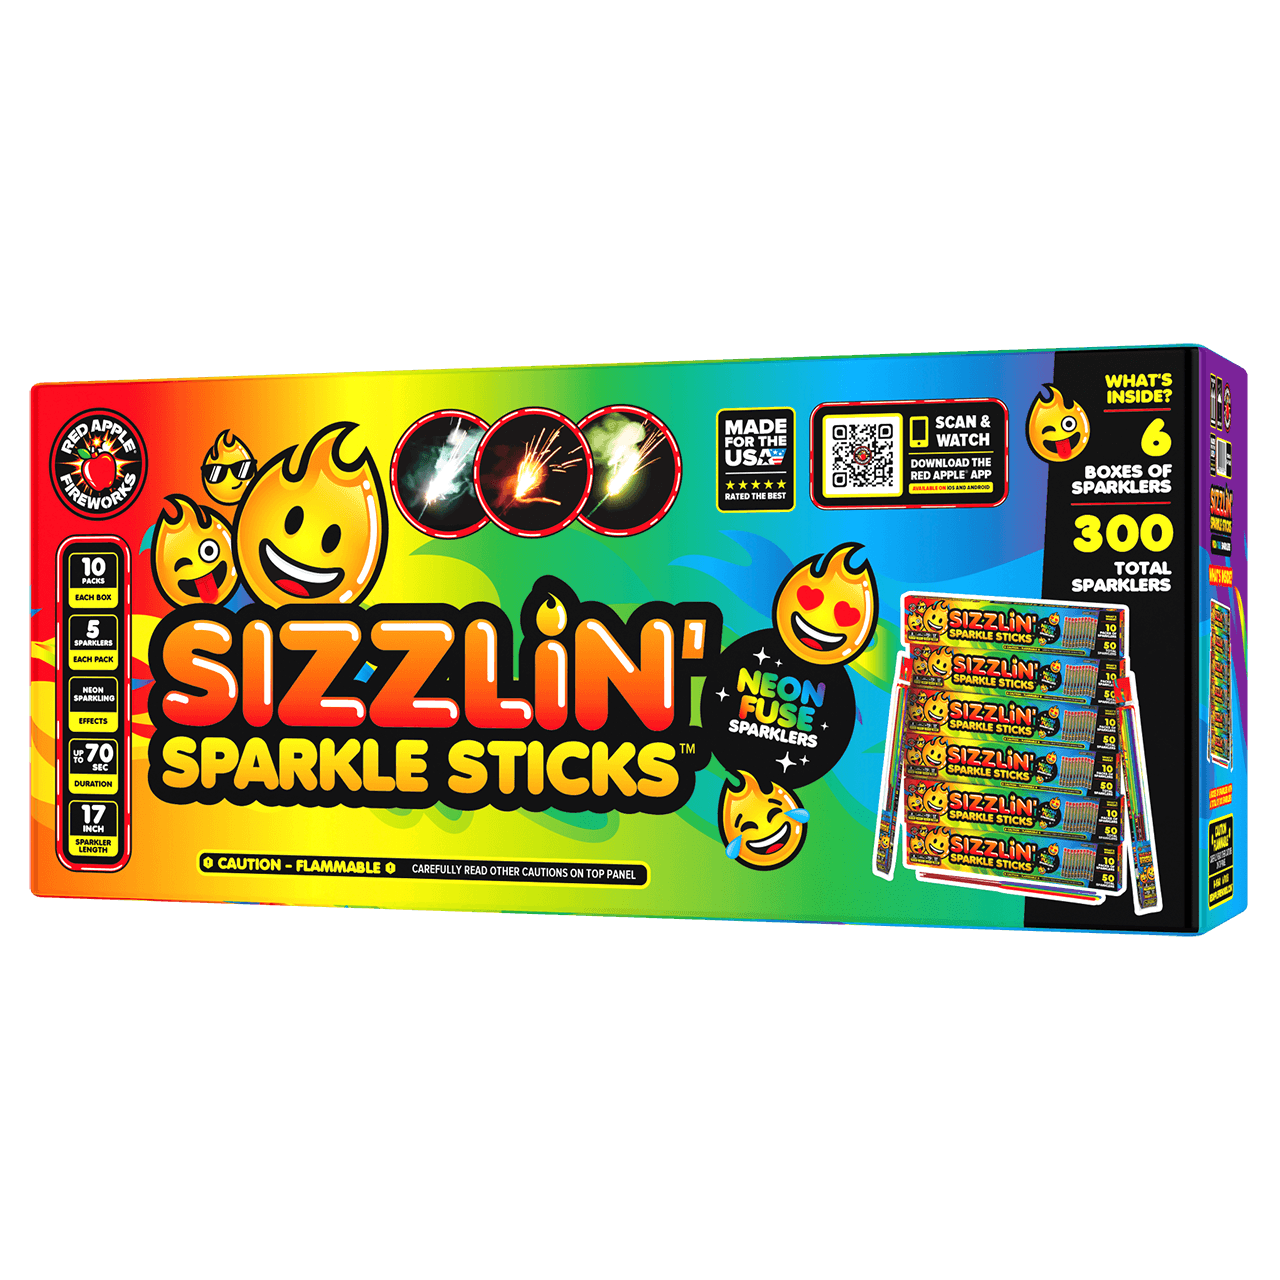 Sizzlin' Sparkle Sticks™ Fuse Sparklers